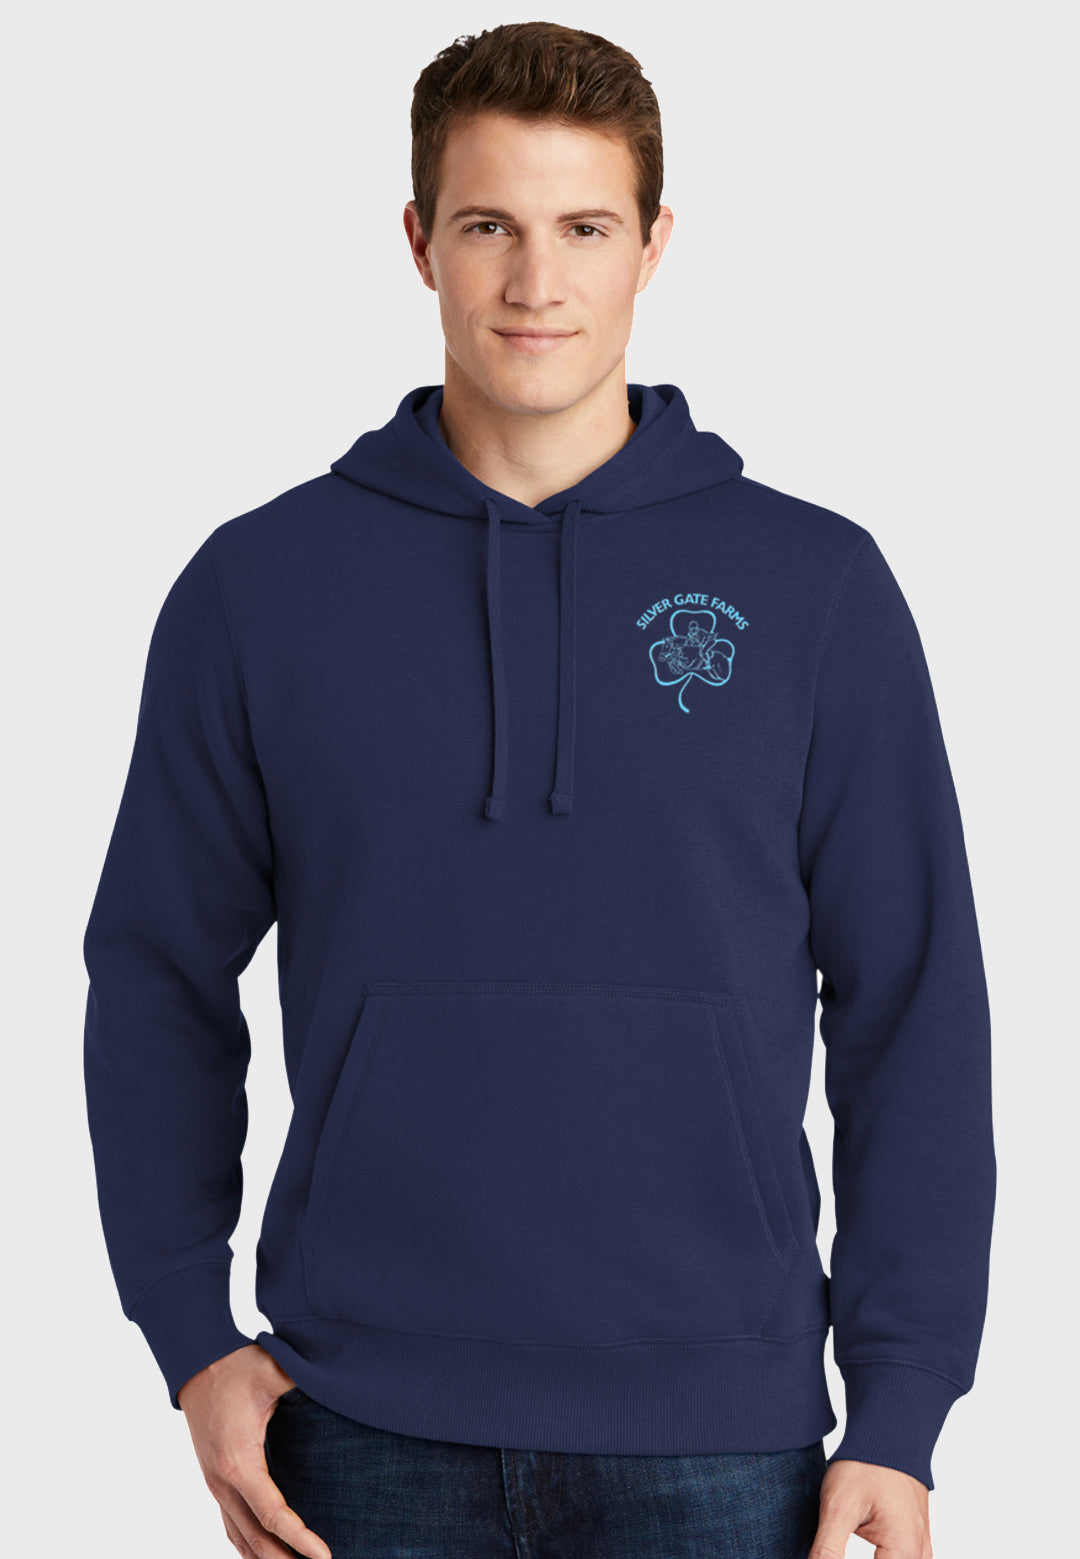 Silver Gate Farms Sport-Tek®  Mens Hooded Sweatshirt - Navy